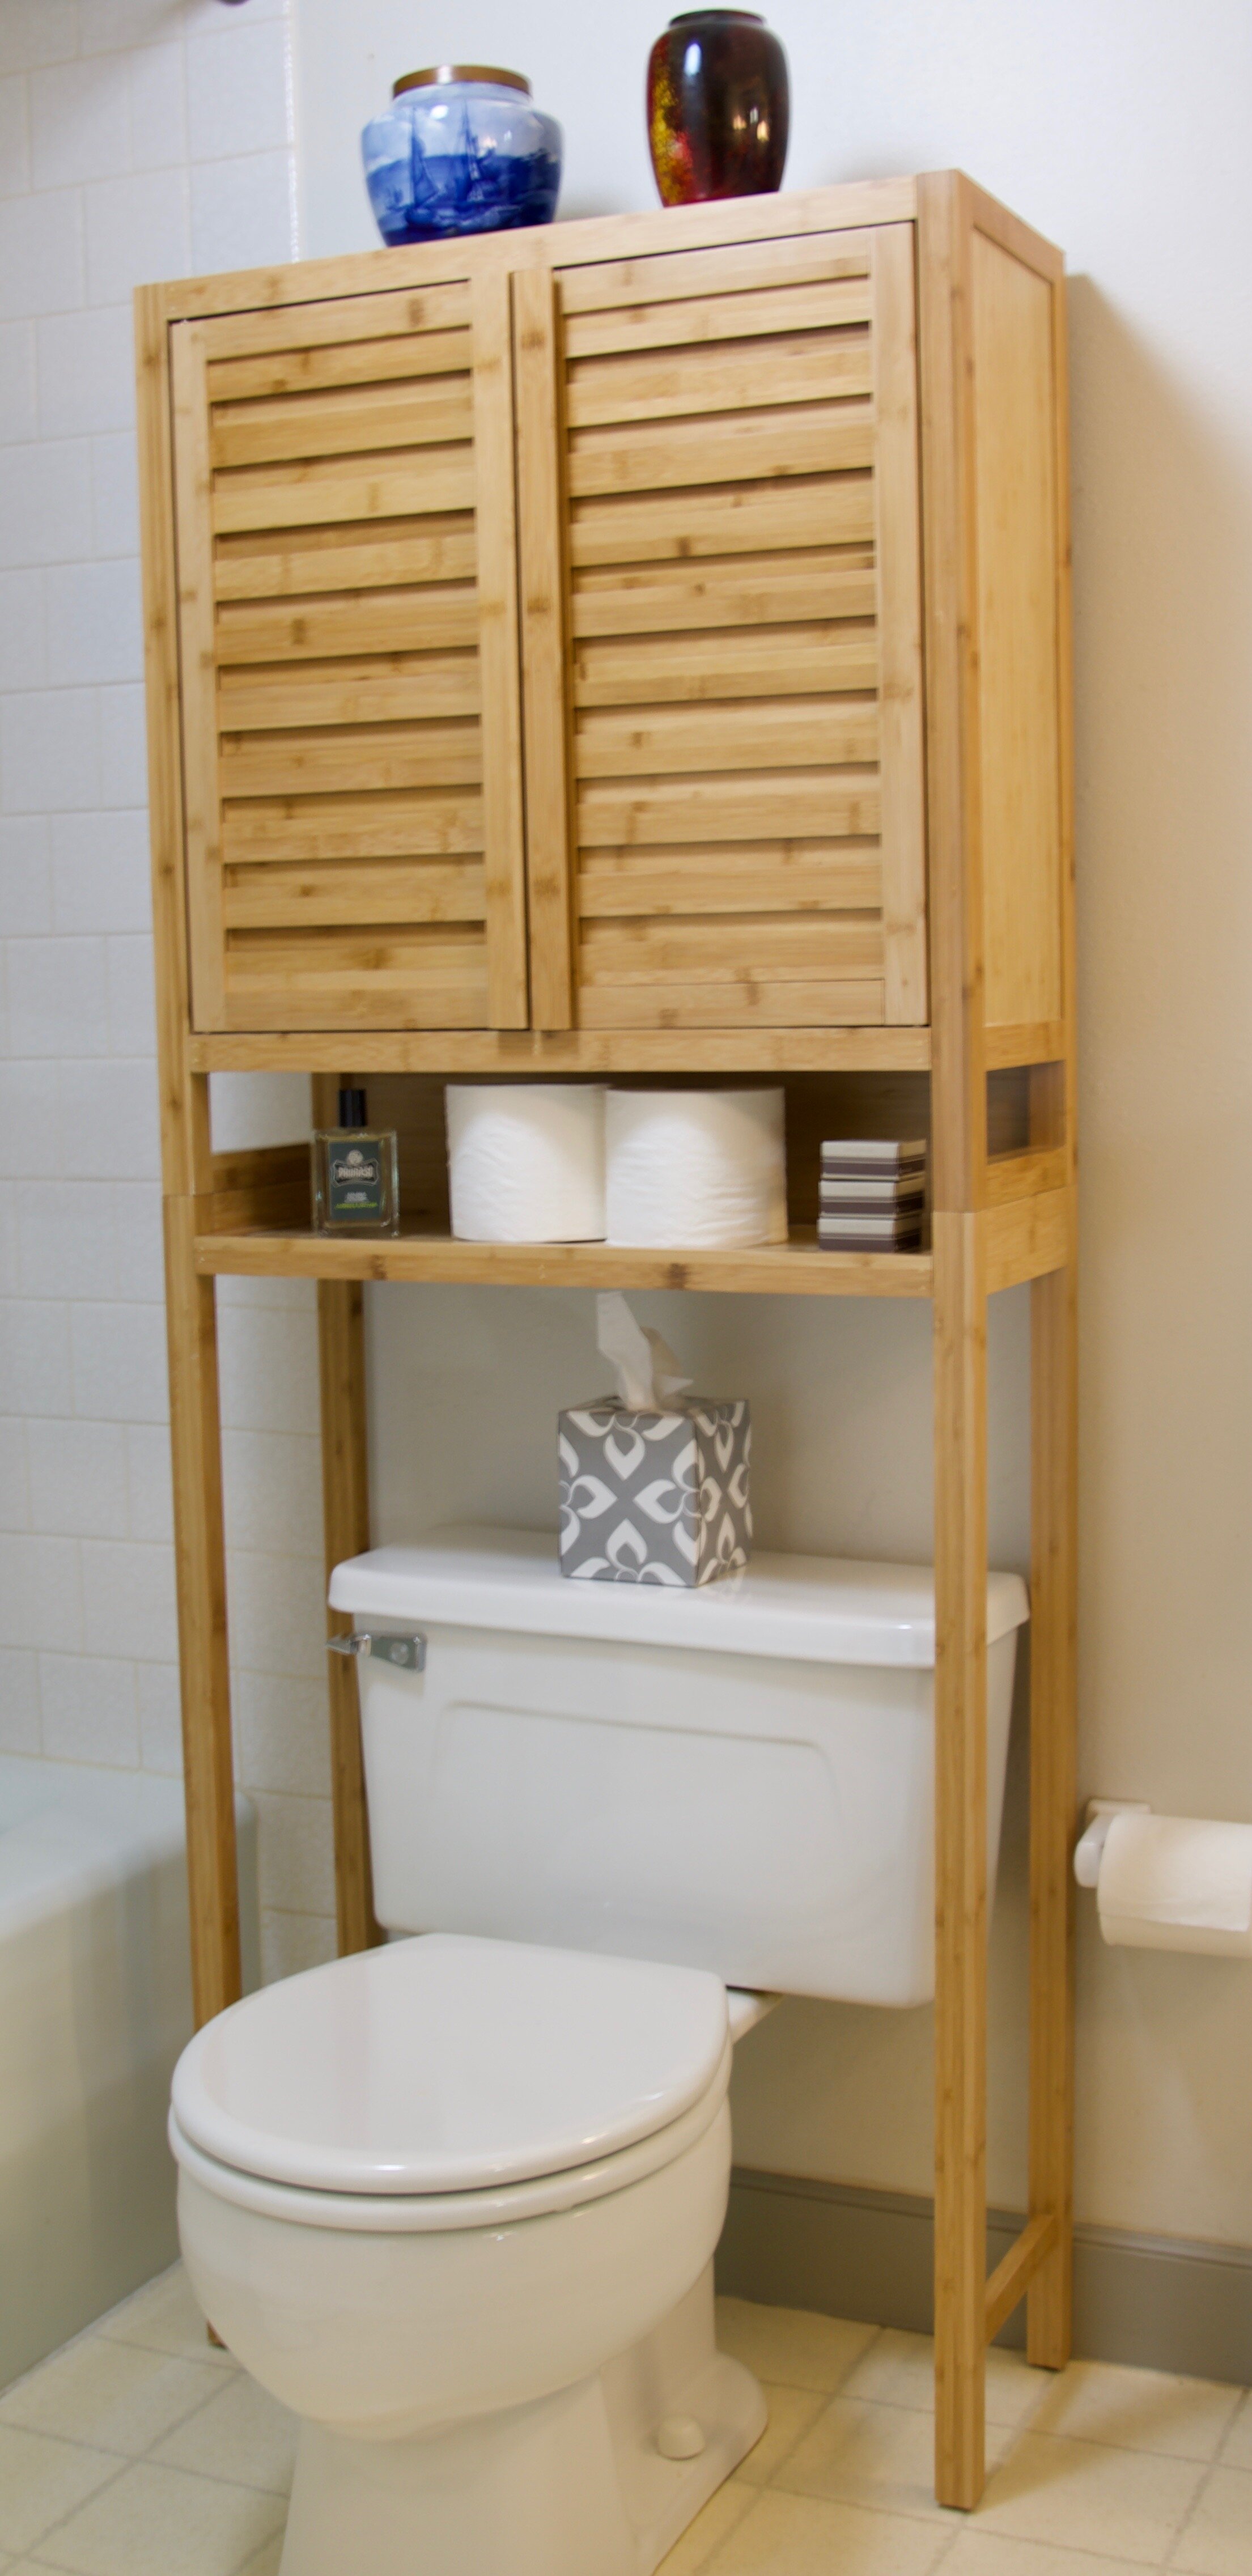 Home Garden Shelves Over The Toilet Storage Bathroom Space Saver Cubby Adjustable Shelves Wood Paper Stbaliaacid